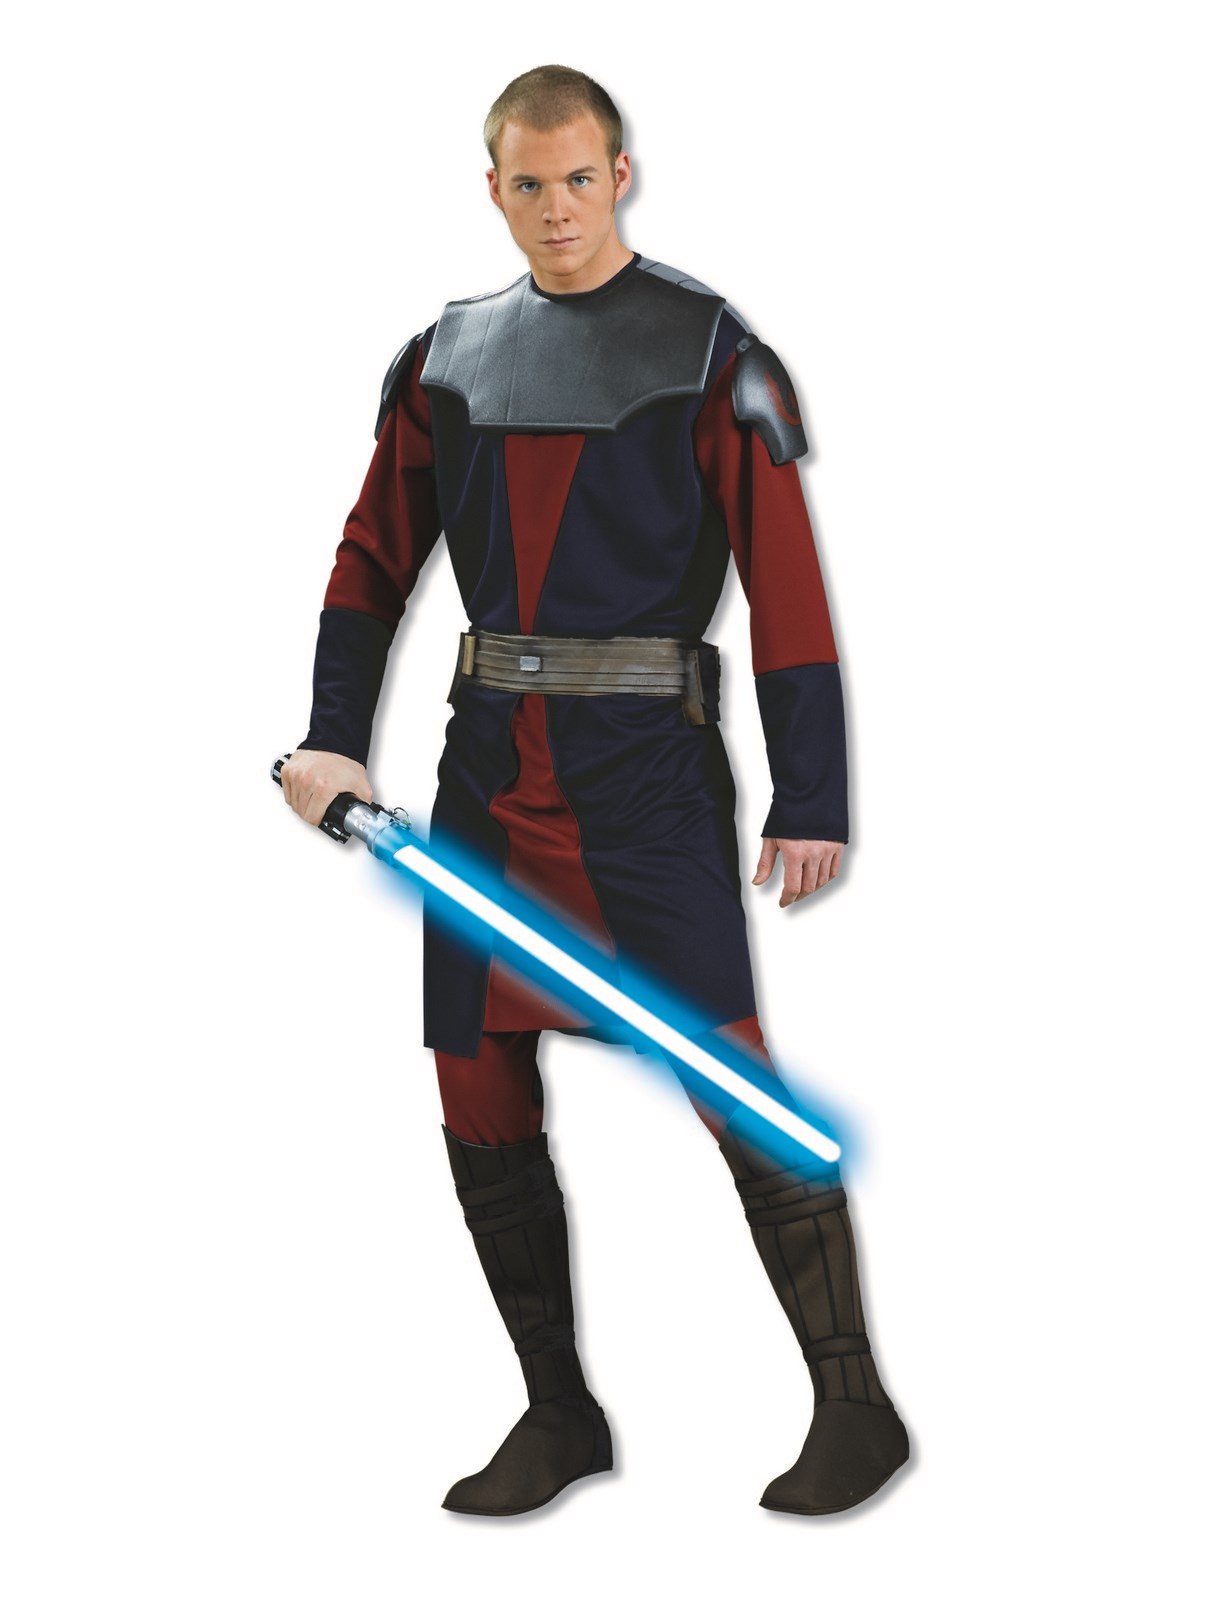 Star Wars Clone Wars Deluxe Anakin Skywalker Adult Costume